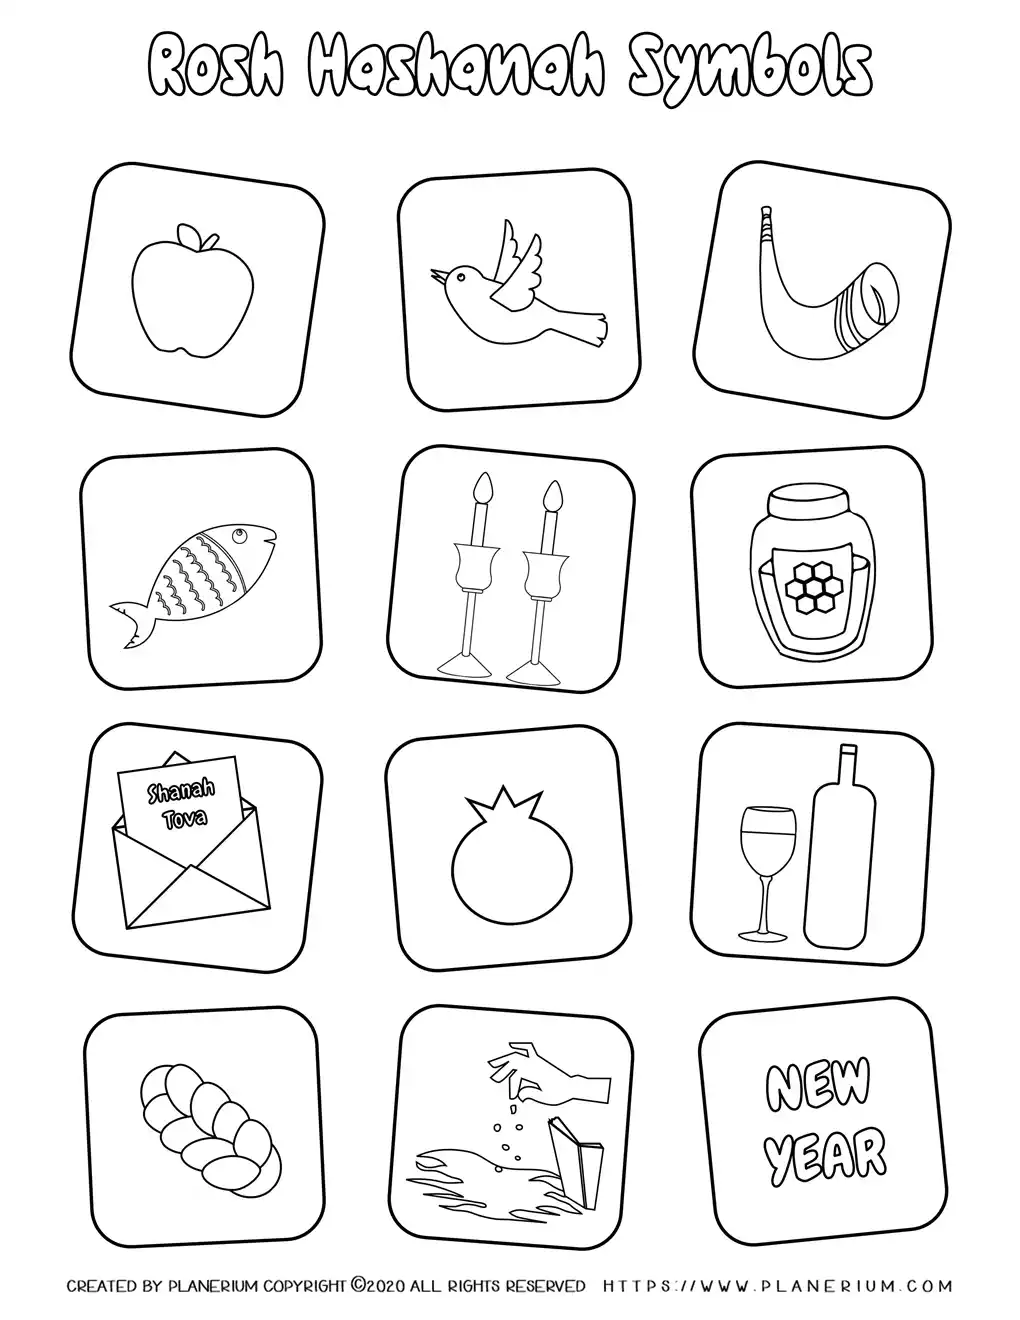 Rosh Hashanah - Coloring Pages - Holiday Symbols | Planerium